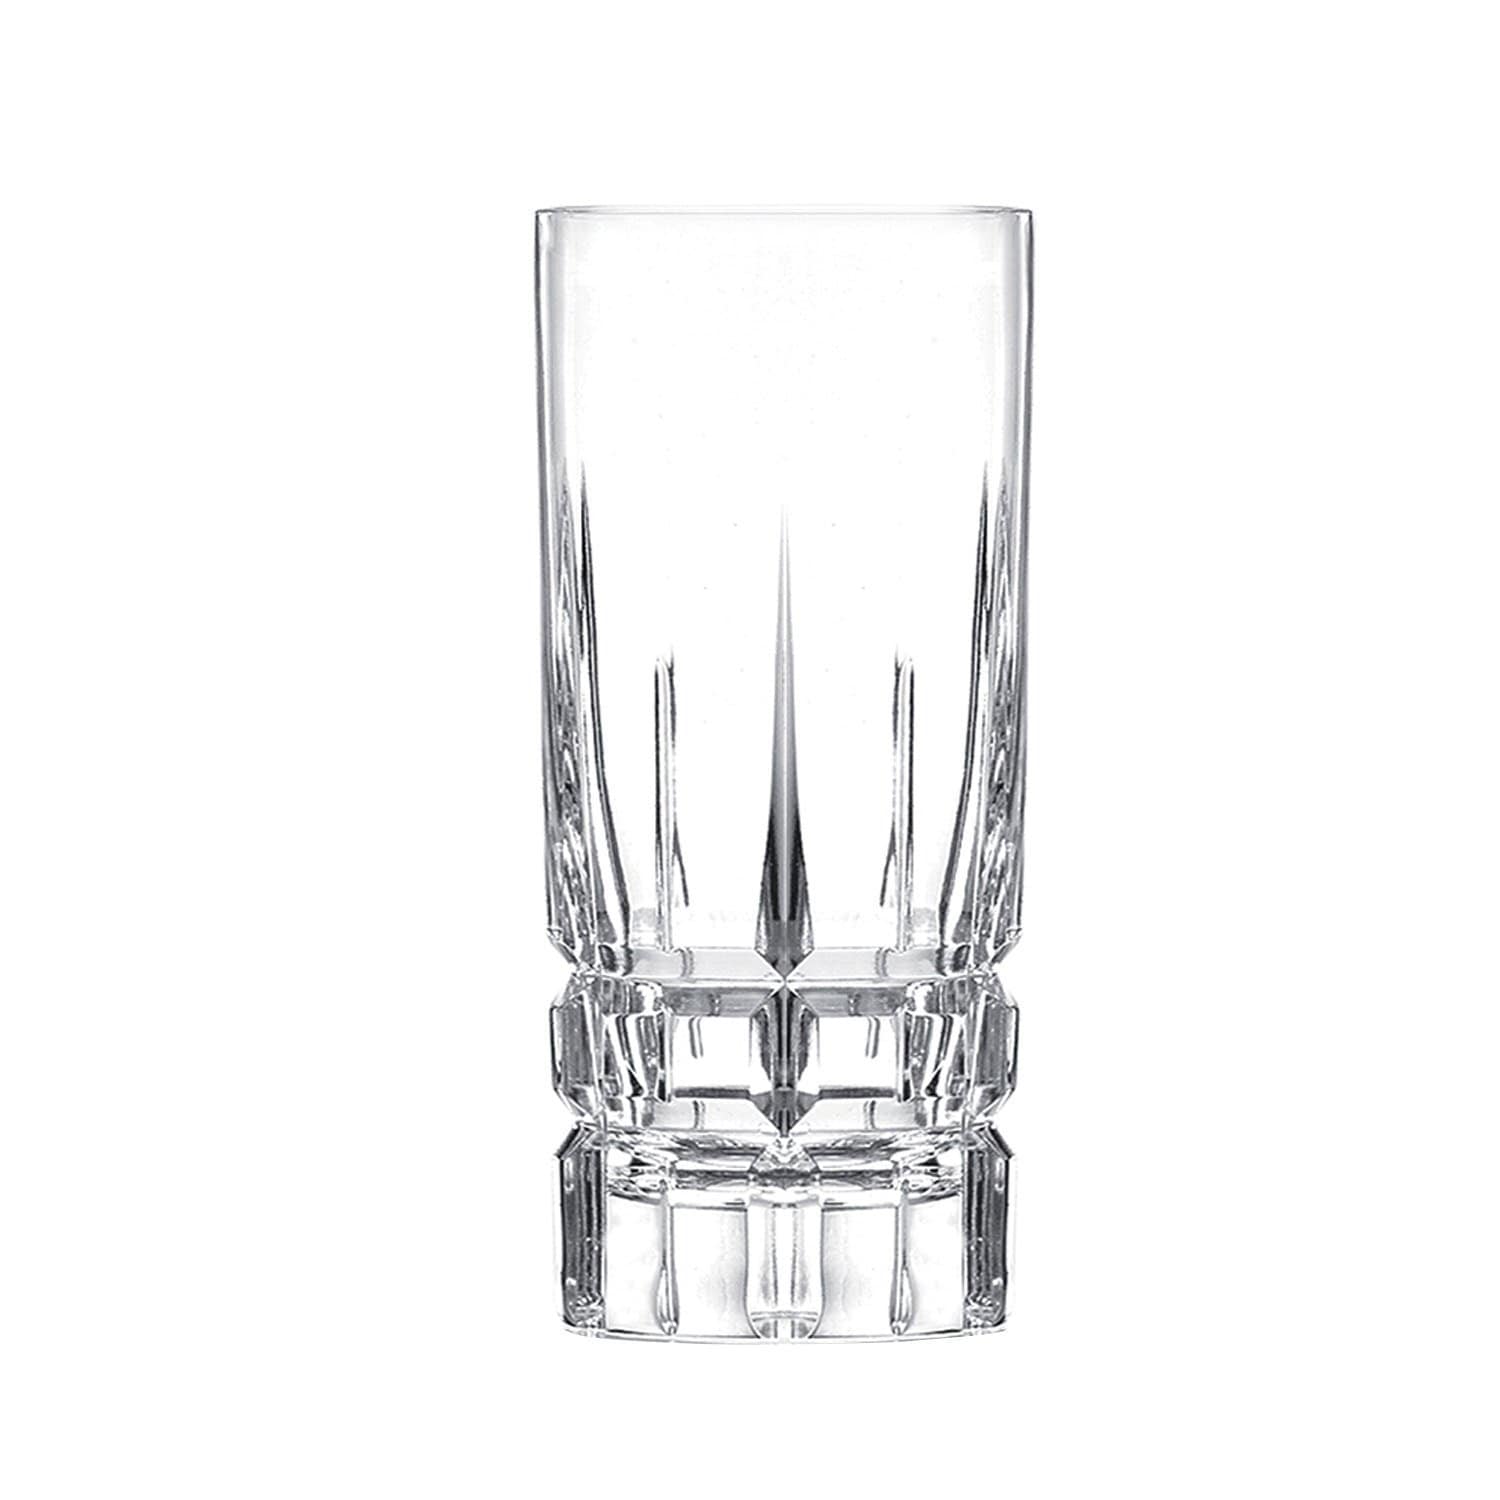 Da Vinci Crystal Long Drink Carrara Tumbler 6 Piece Set - 25624020006 - Jashanmal Home